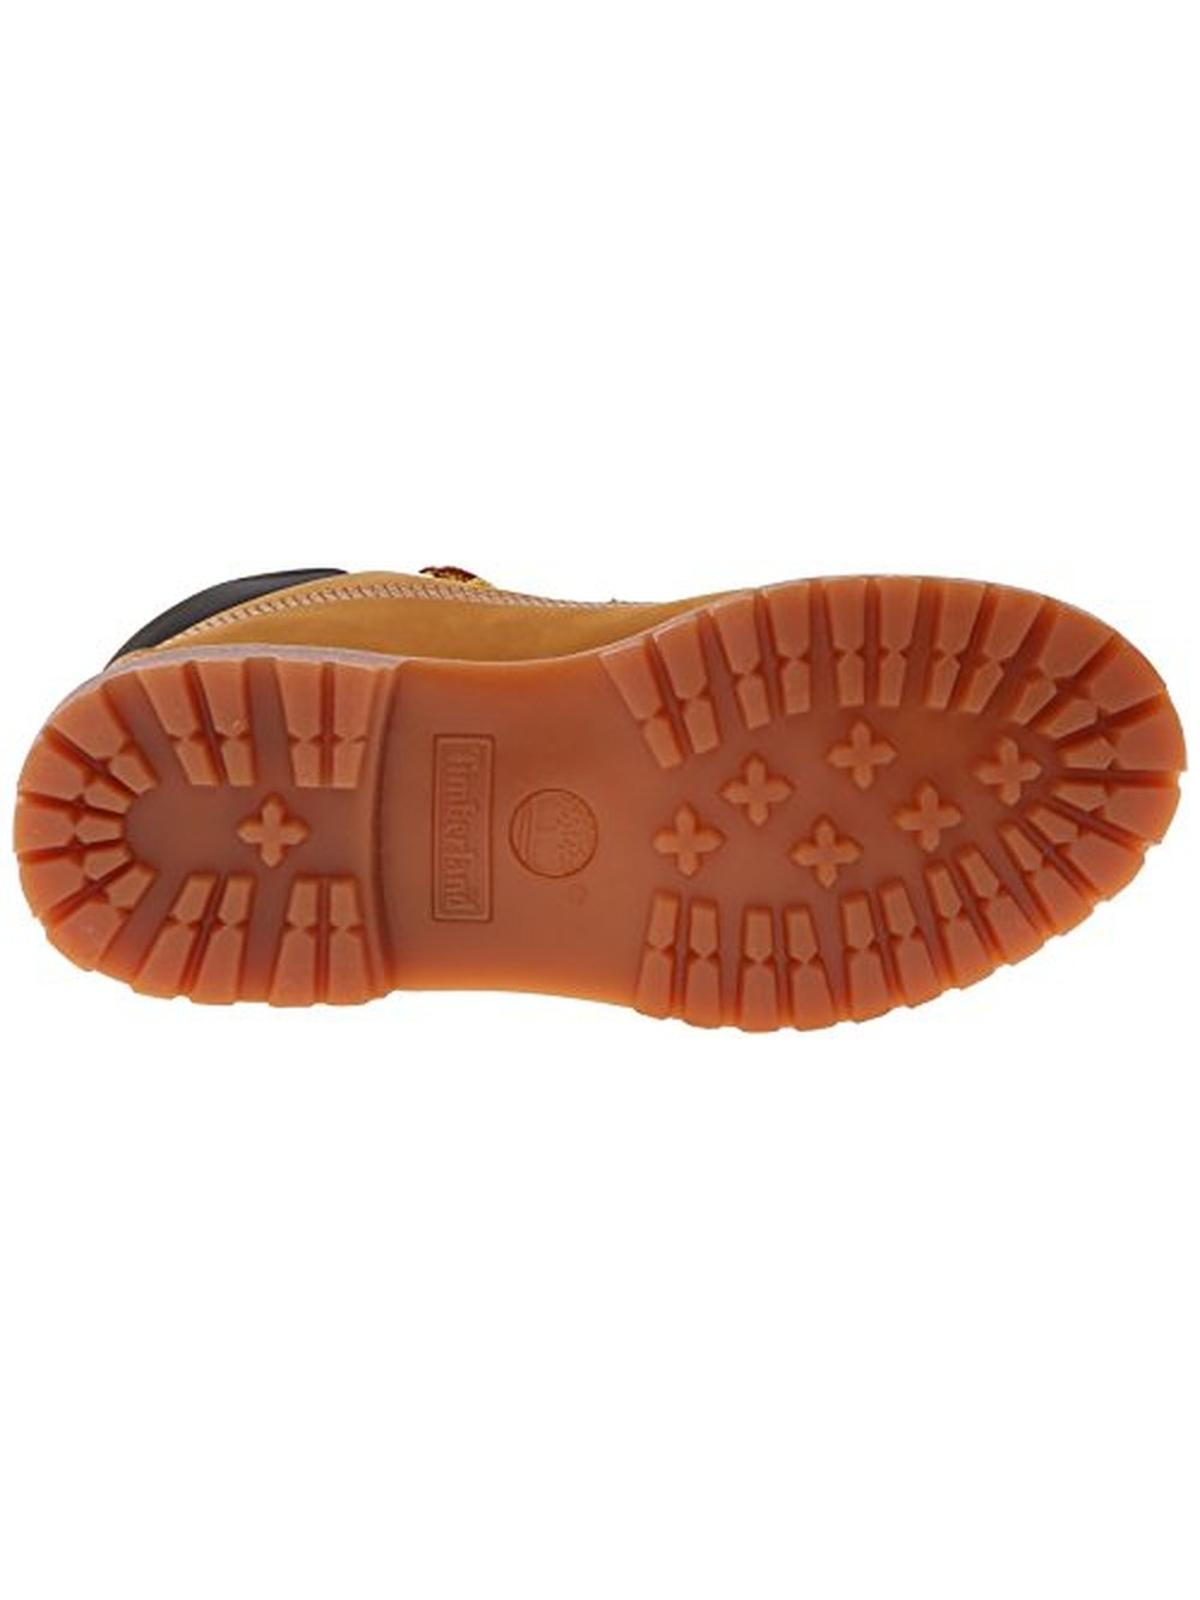 Timberland Women's Icon 6 Inch Premium Boot - image 3 of 4